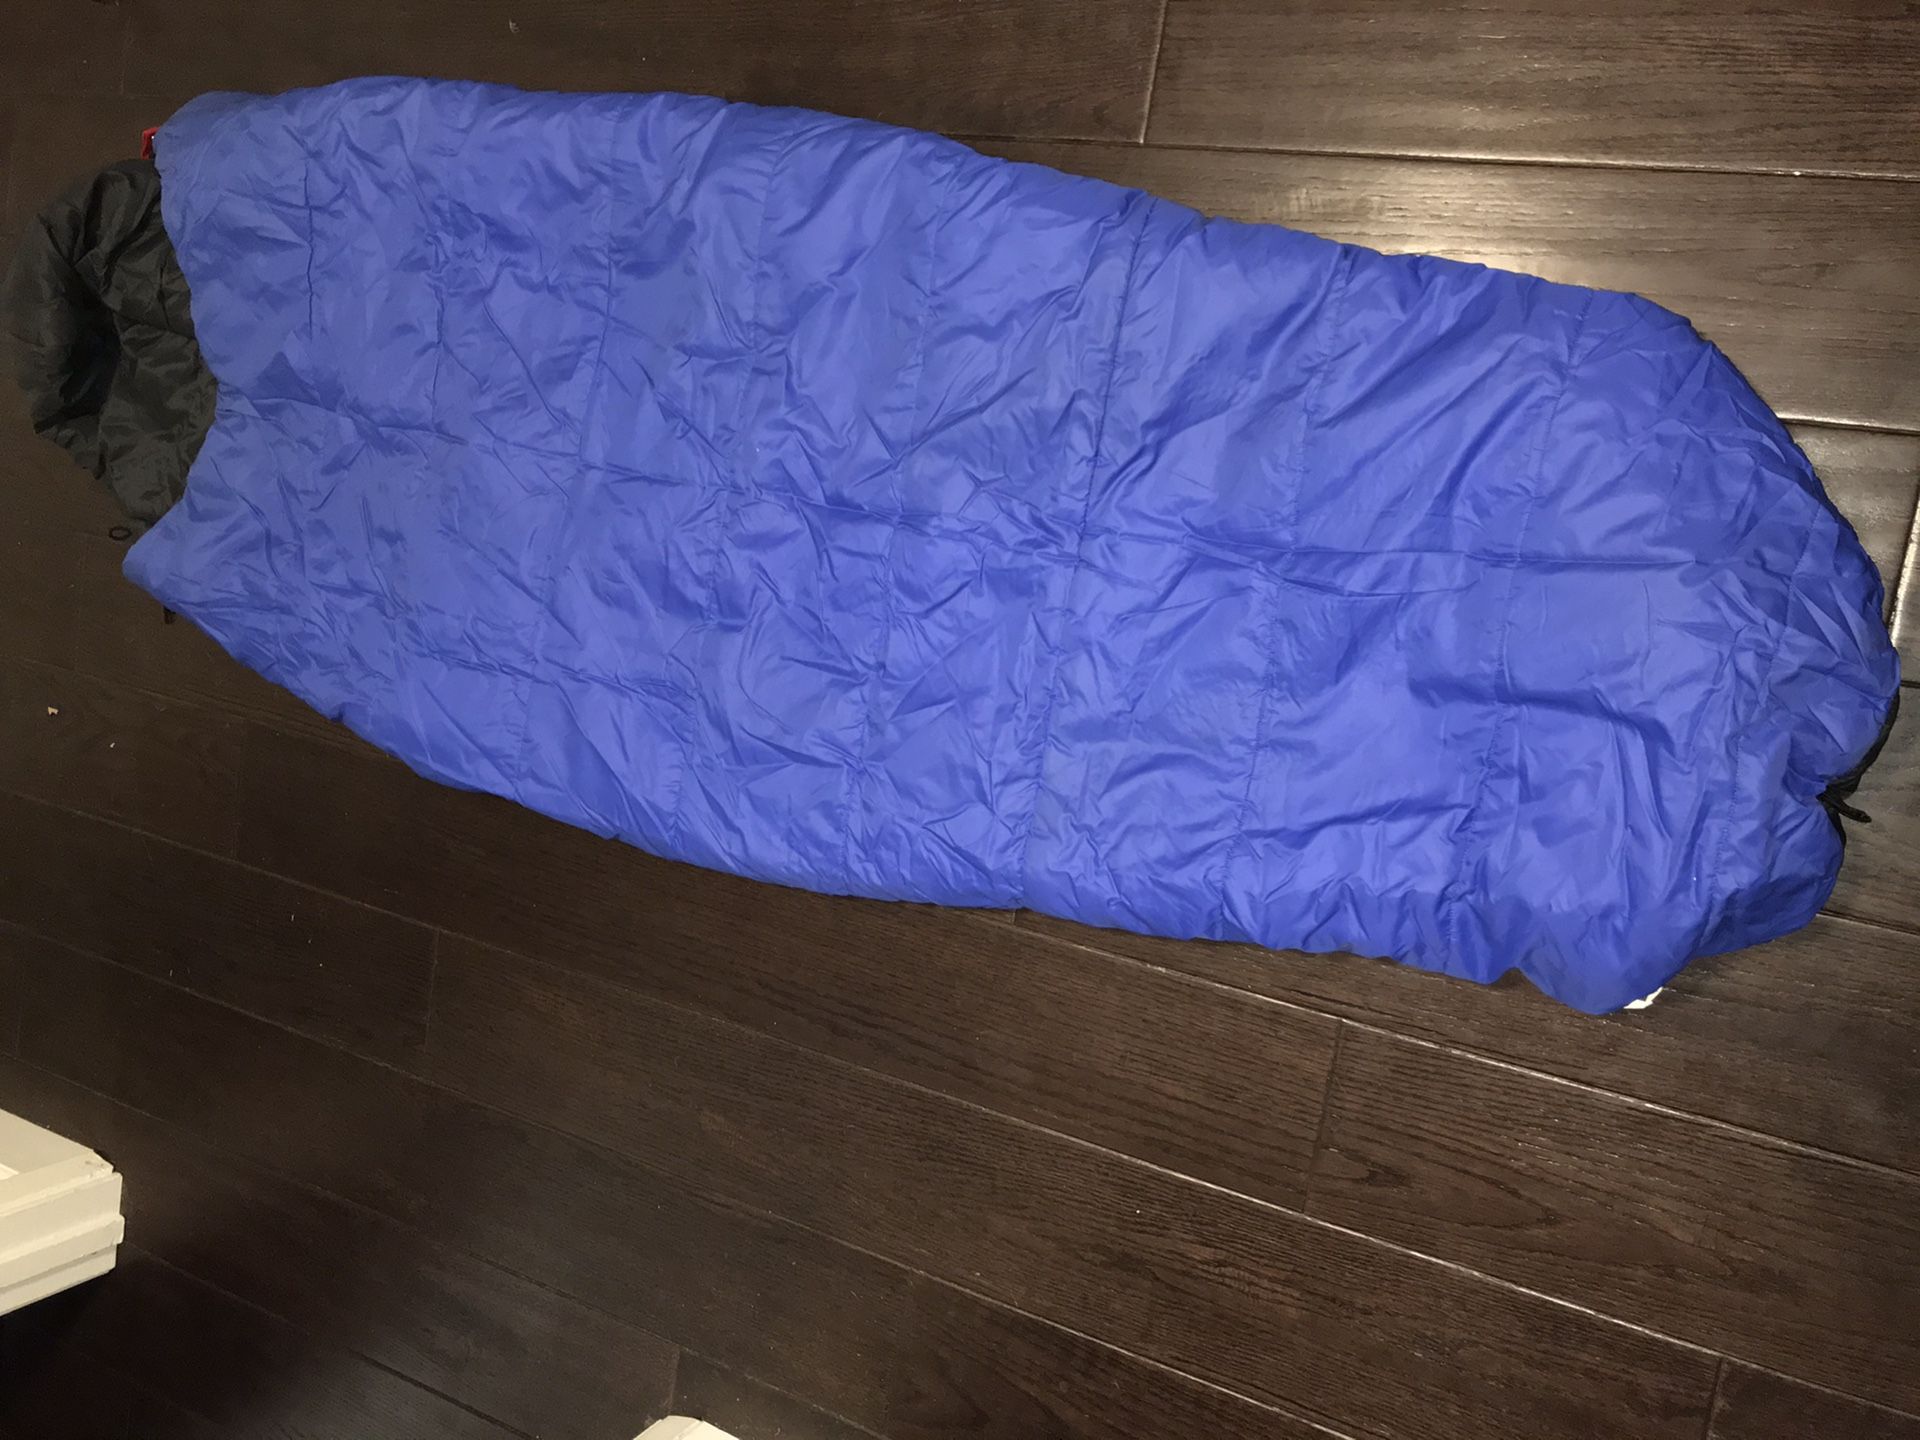 REI Quallofil Sleeping bag